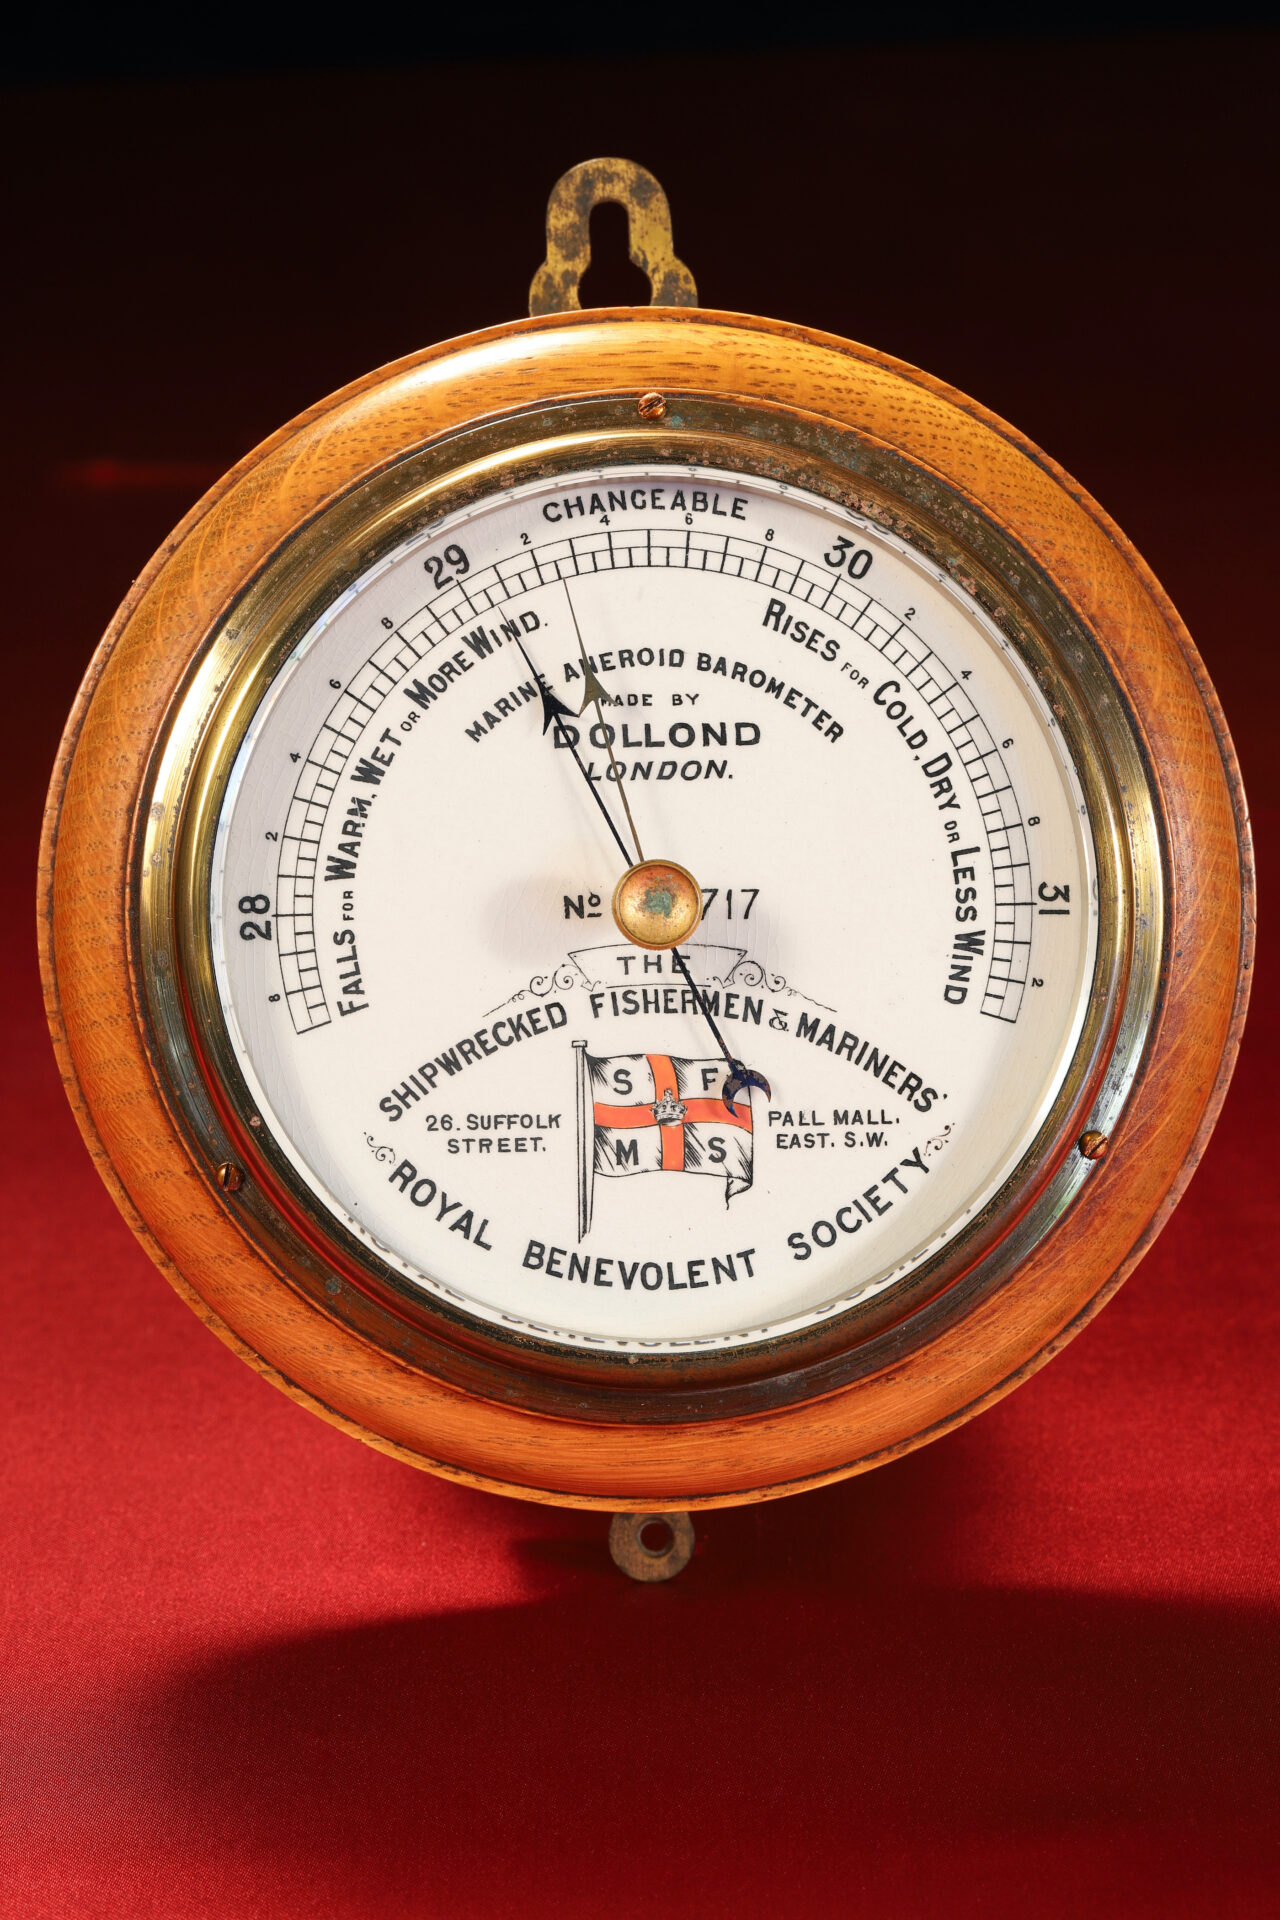 Dollond Shipwrecked Mariners Society Barometer No 717 c1895